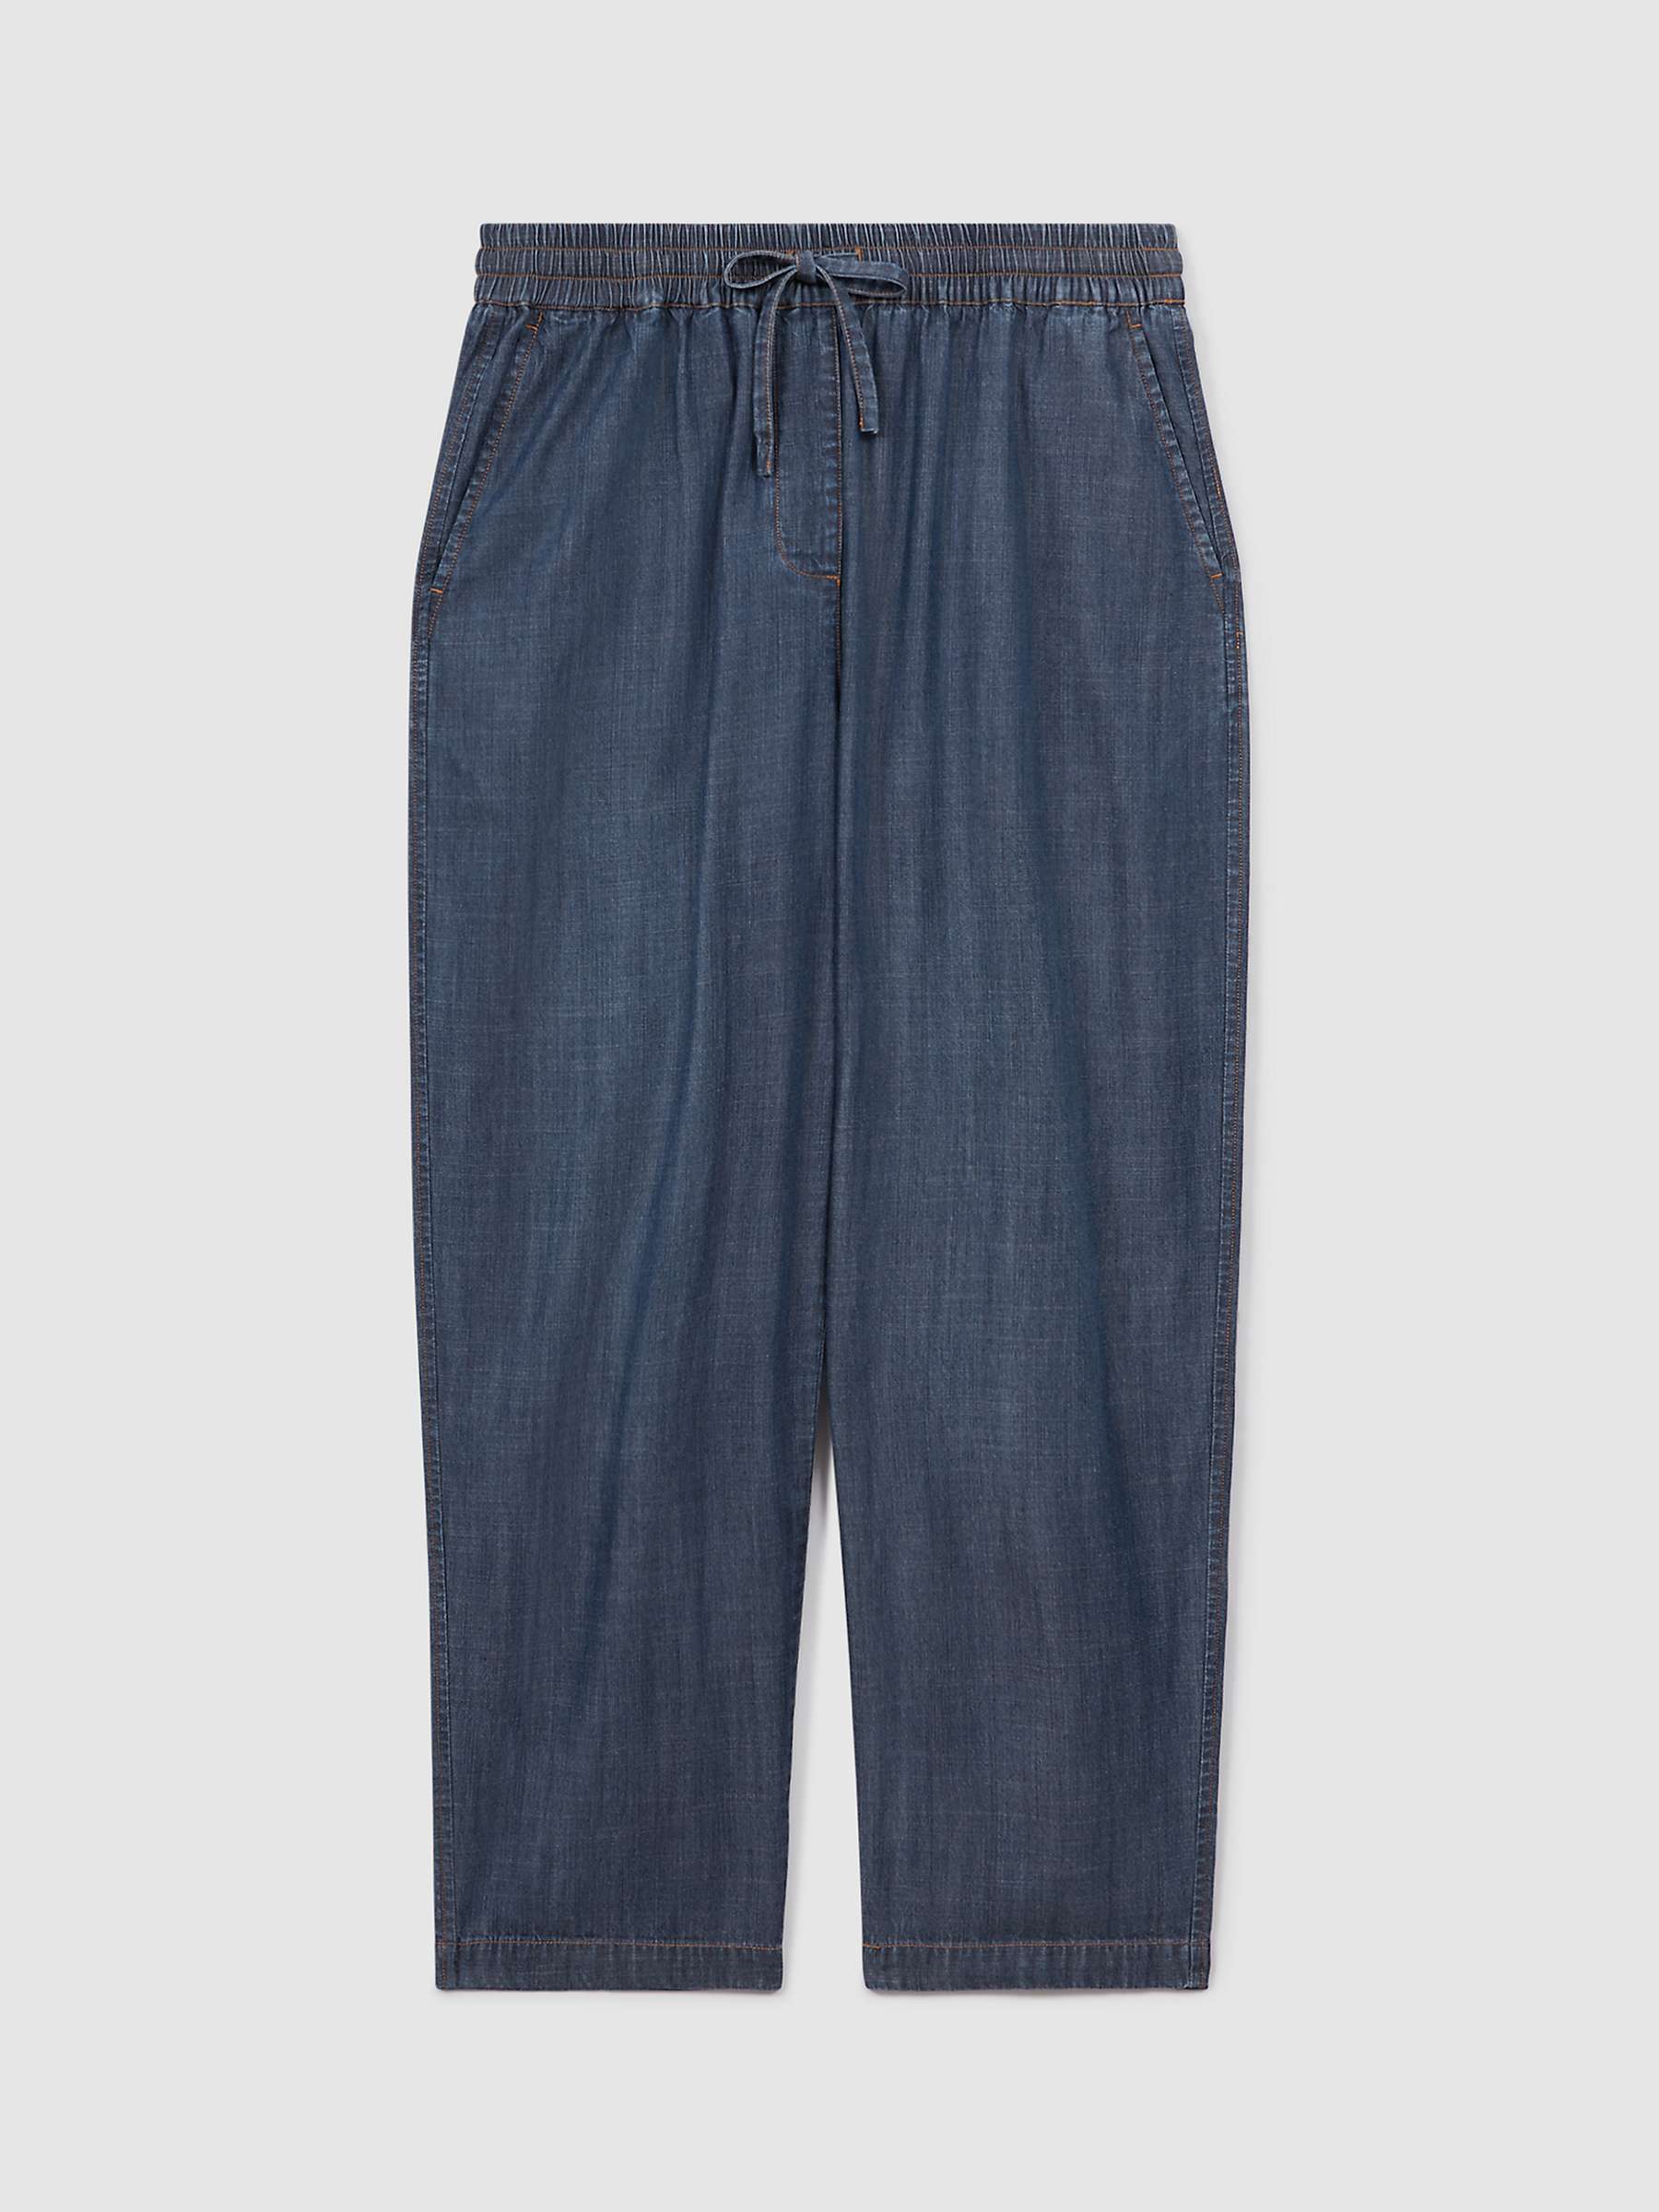 Buy Reiss Carter Denim Drawstring Waist Trousers, Mid Blue Online at johnlewis.com